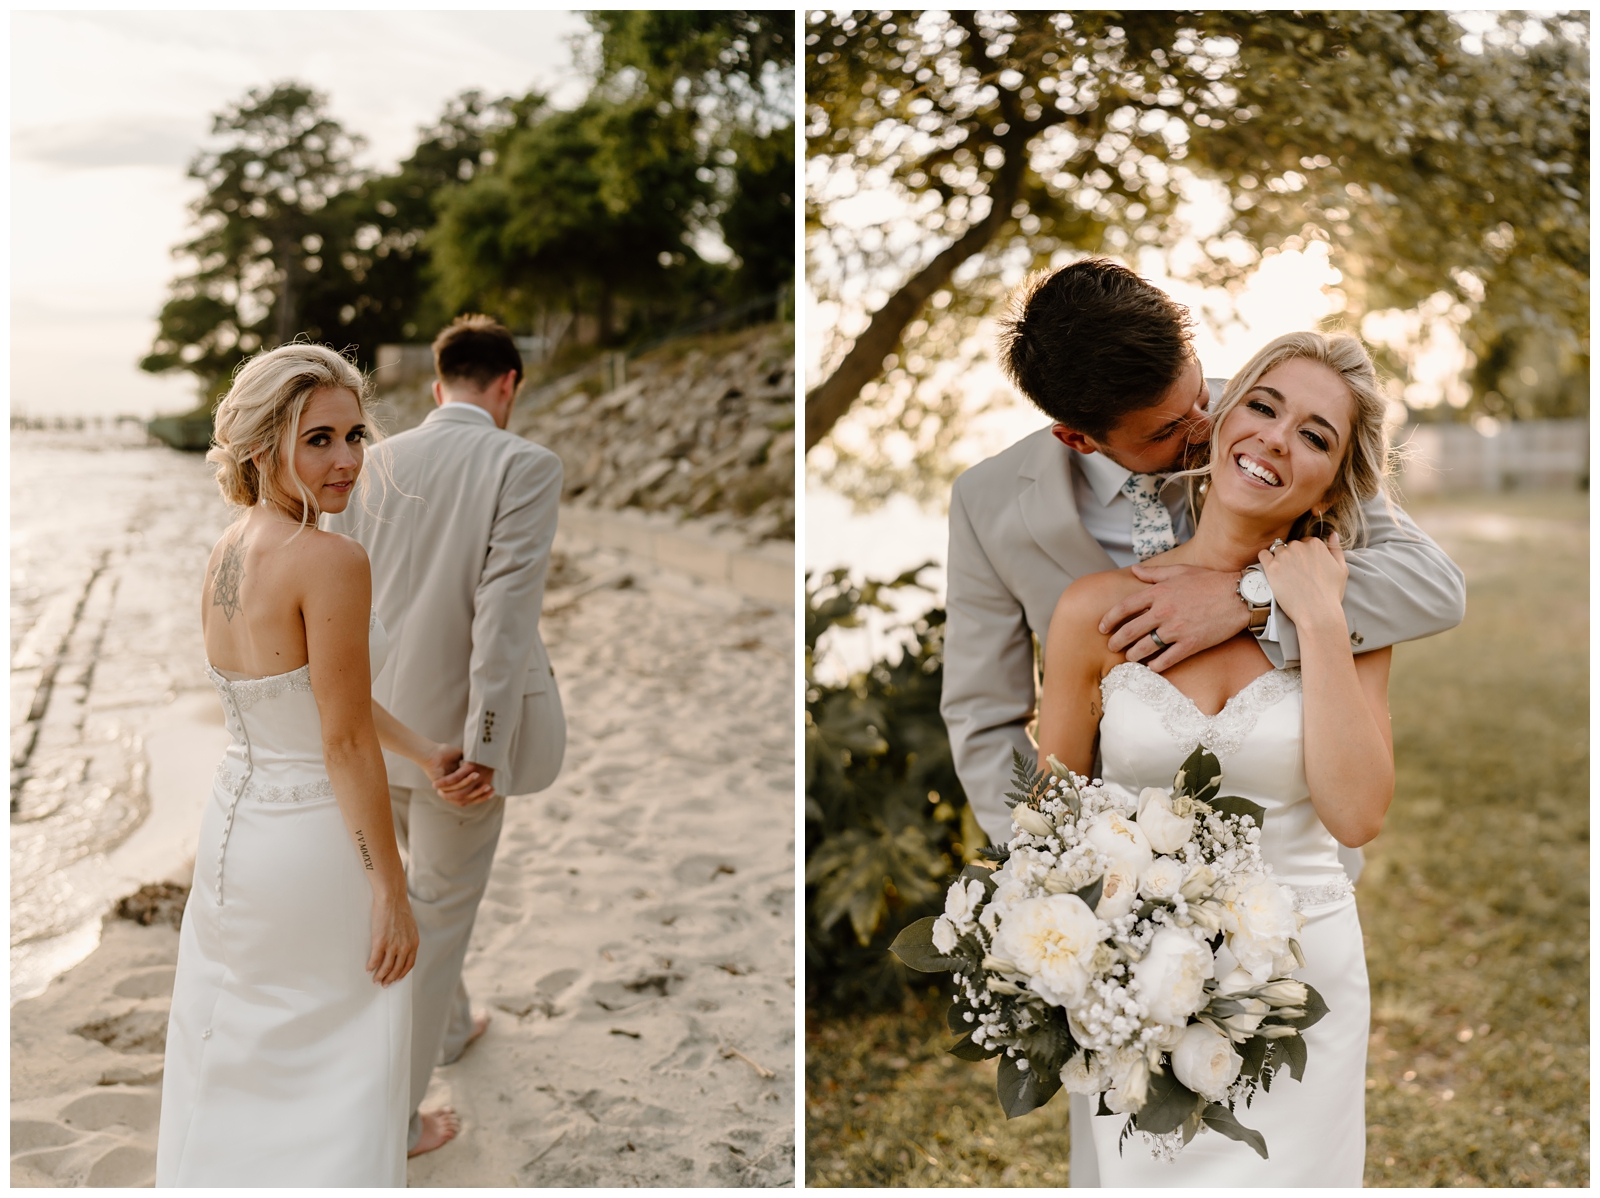 Precious wedding day newlywed photos on Roanoke Island, OBX